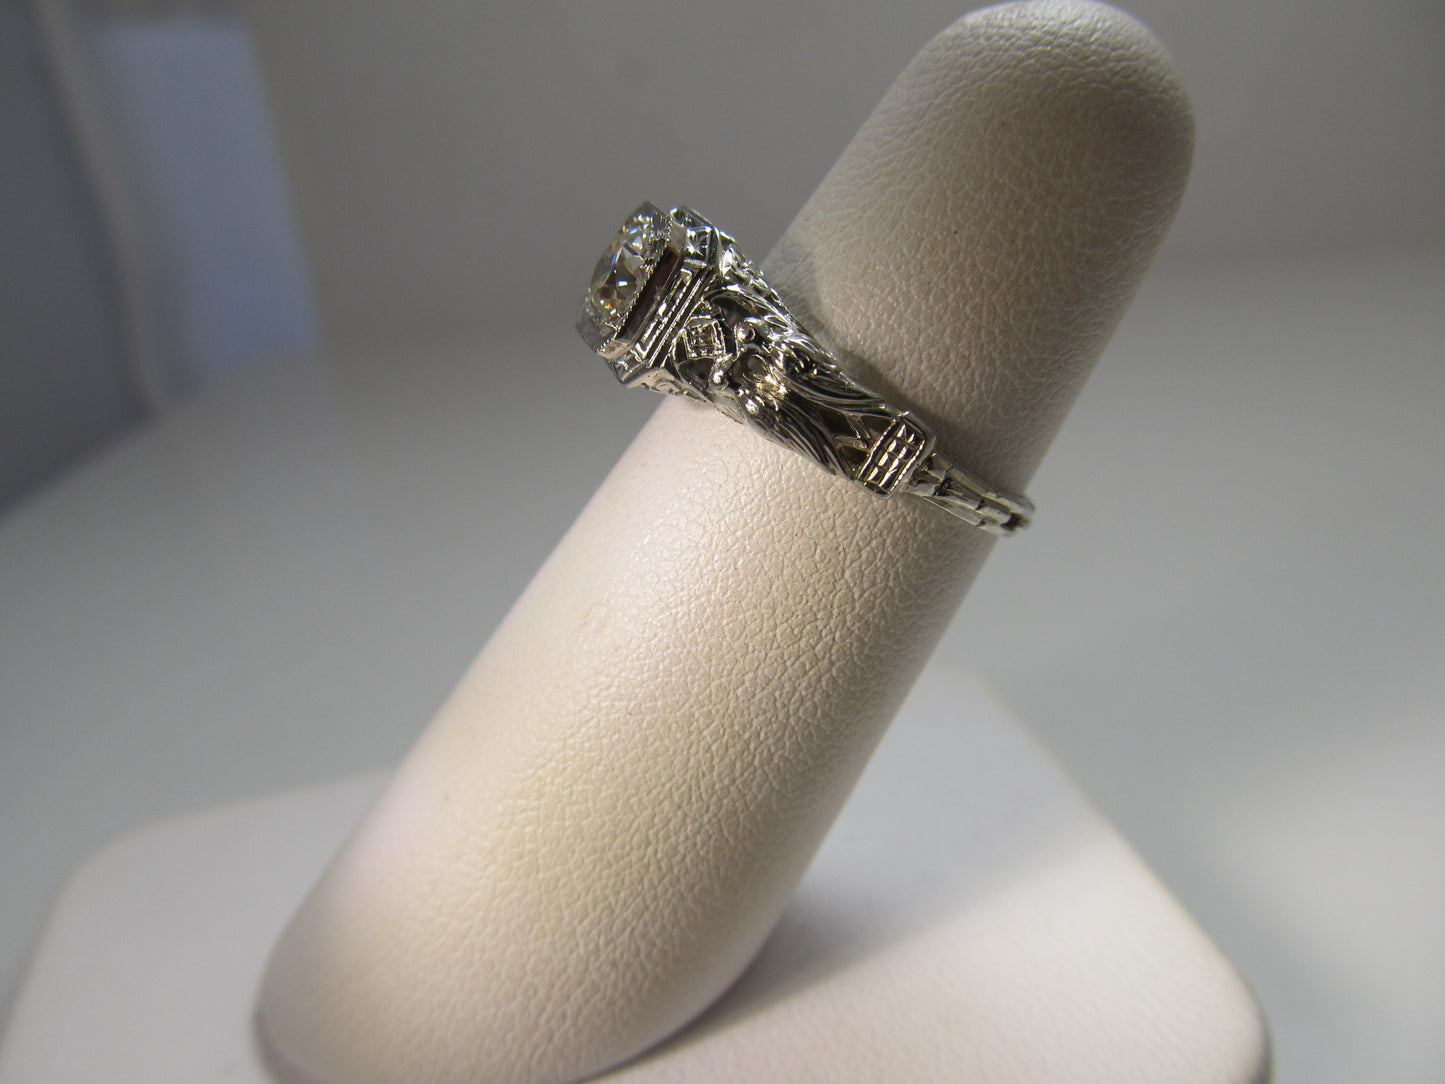 MUST SEE antique filigree diamond ring